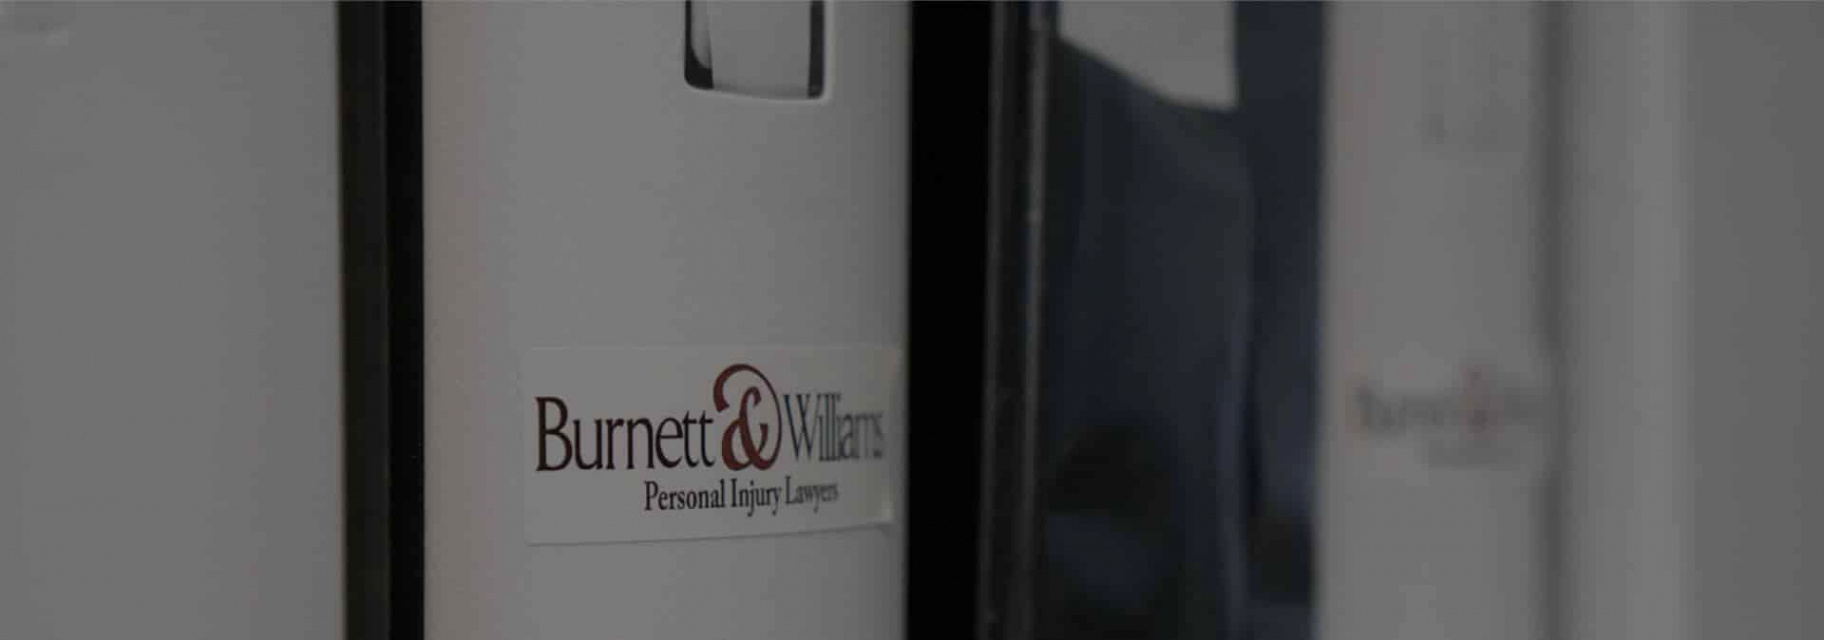 Personil Injury Lawyer In Hopewell Va Dans Hopewell - Burnett & Williams